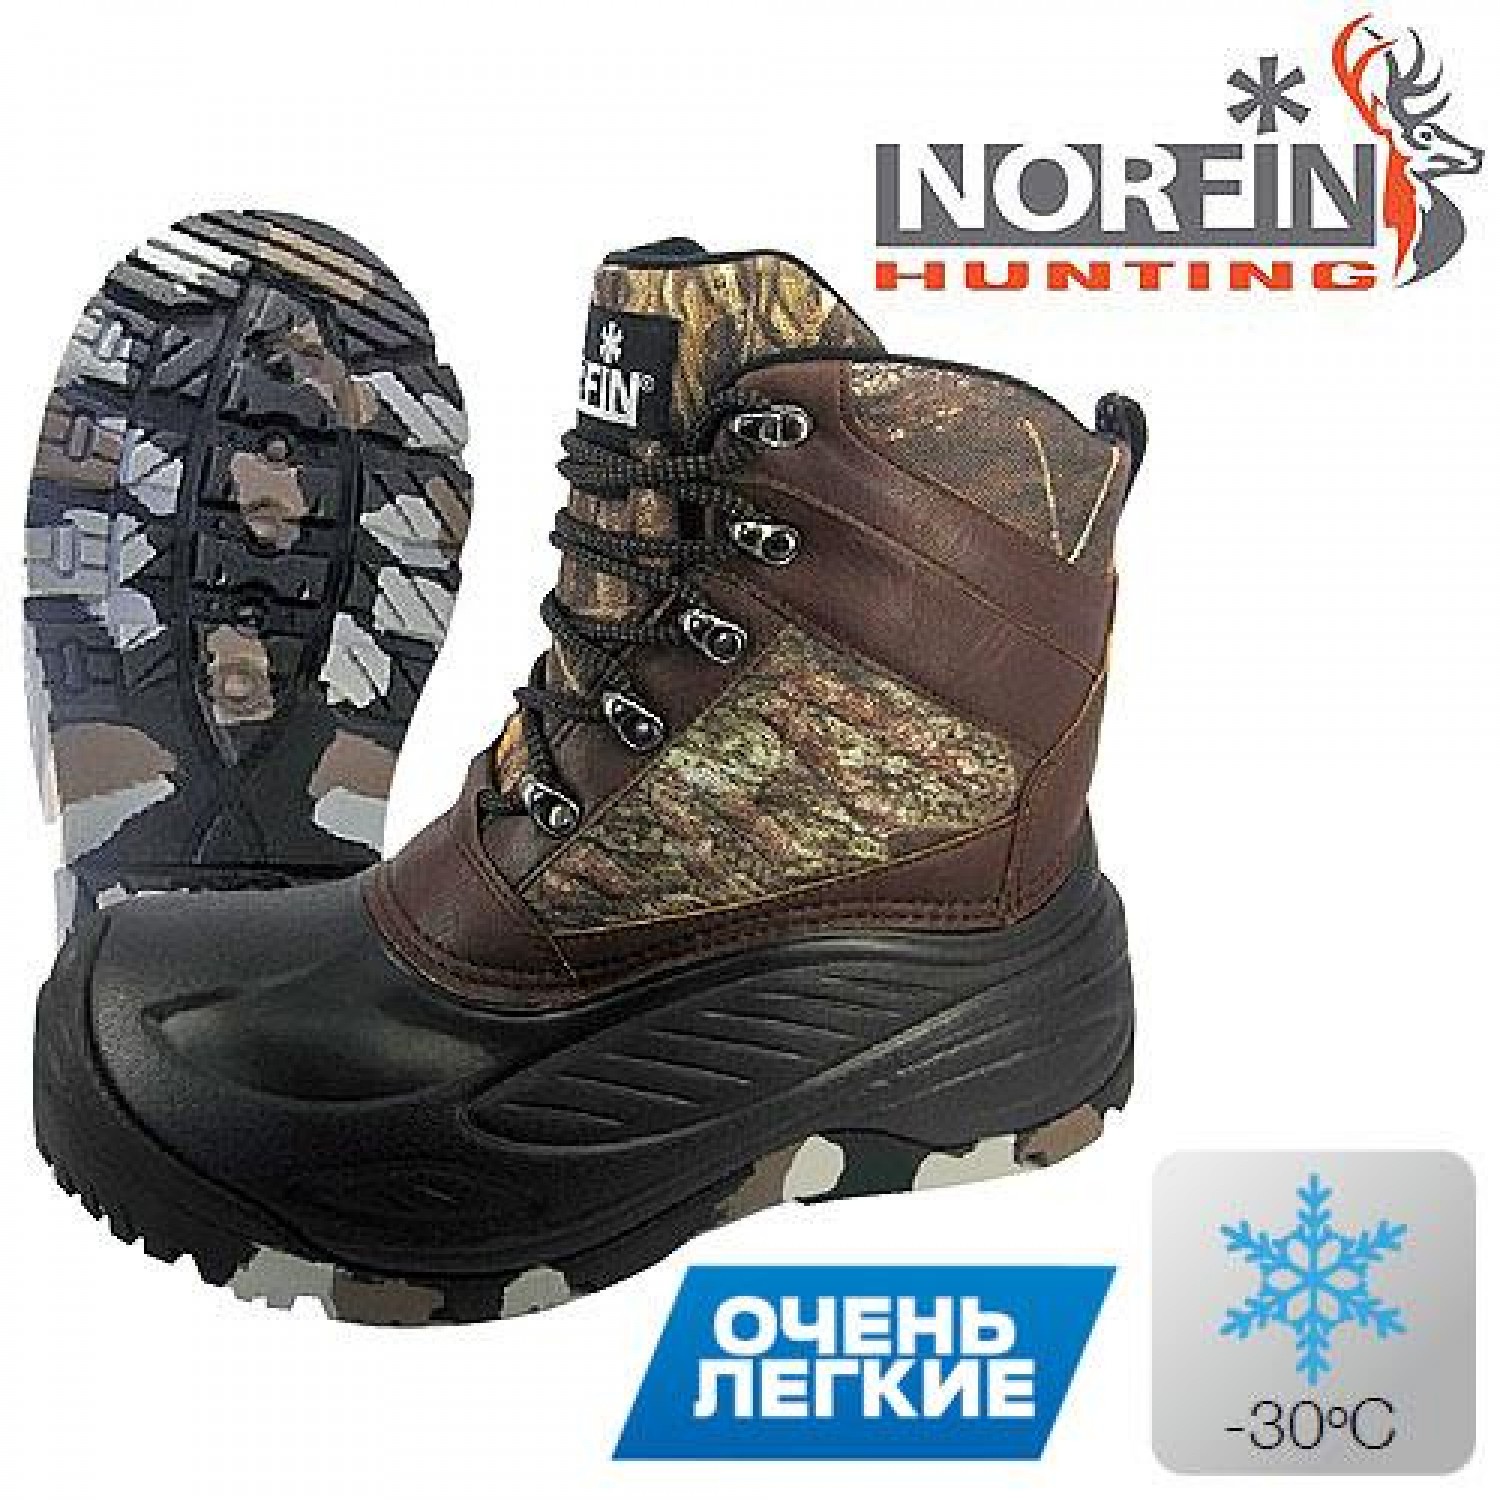 Покупка Ботинки зимние NORFIN Hunting Discovery в Минске Беларуси